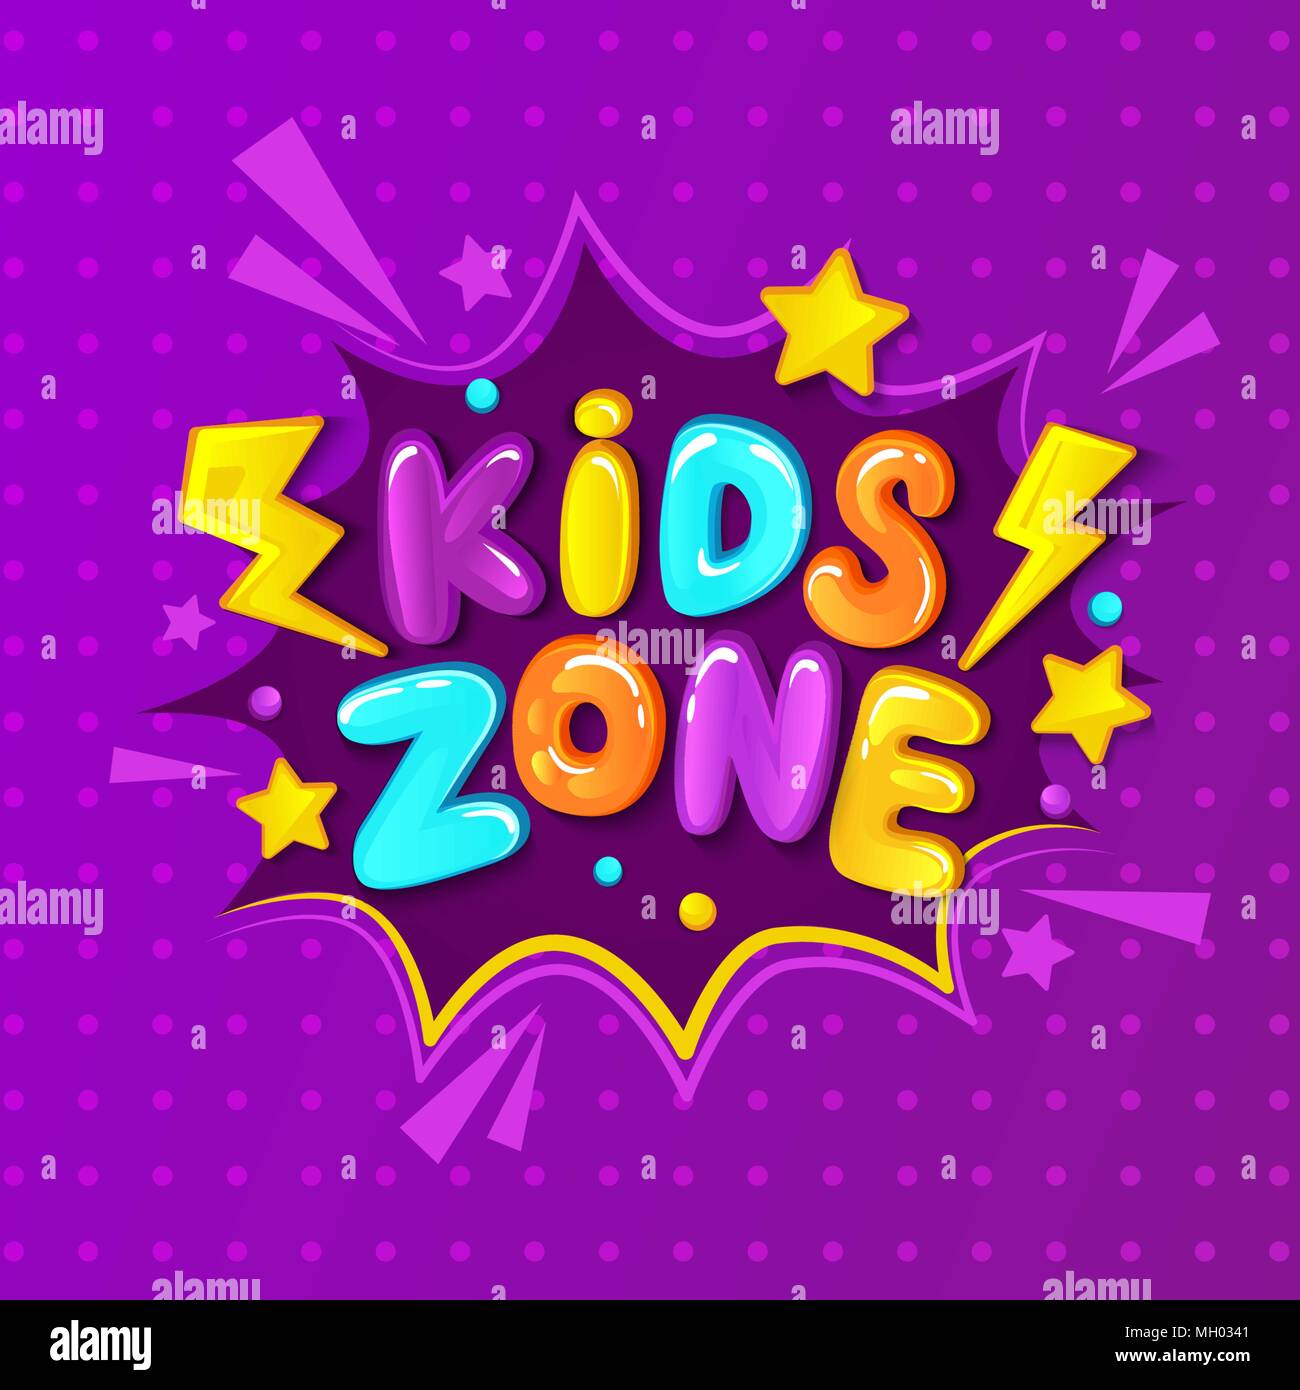 Kids Zone Banner Emblem Oder Logo Im Comic Stil Fur Spass Und Spiel Statt Vector Illustration Stock Vektorgrafik Alamy